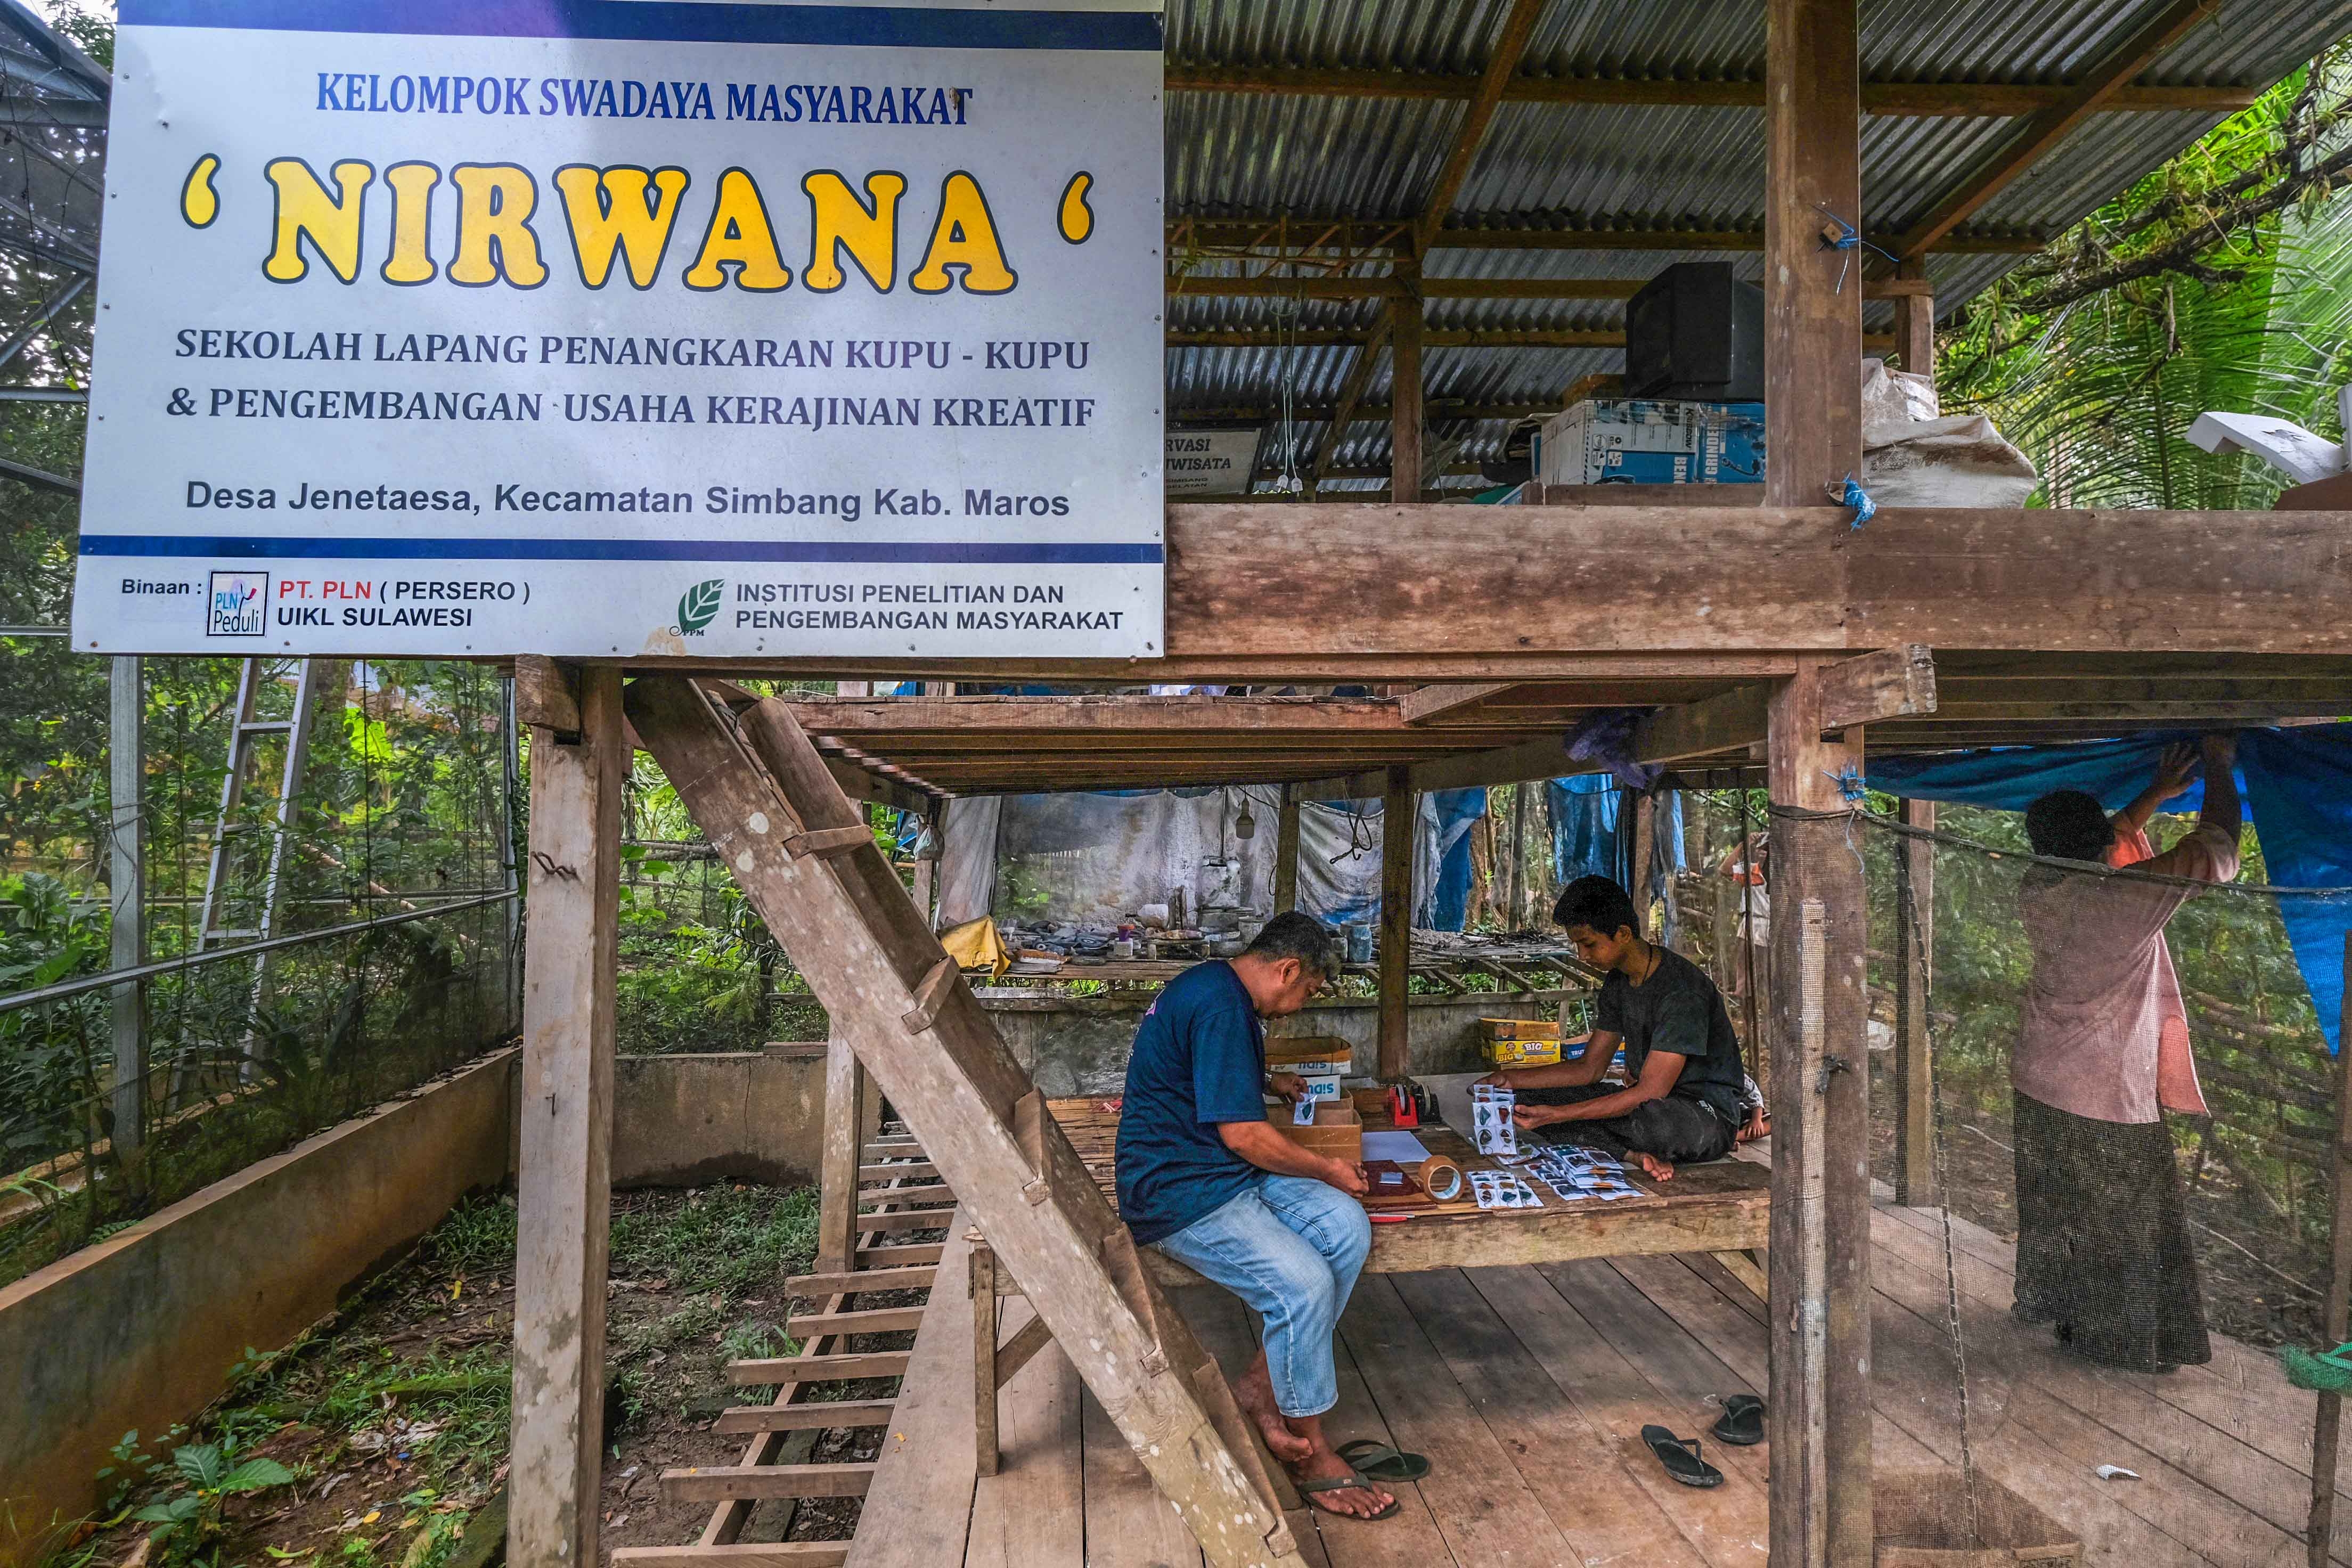 UMKM Nirwana di Desa Jenetaesa, Kabupaten Maros mendapatkan bantuan penangkaran kupu-kupu dan alat produksi kerajinan souvenir dari PLN.